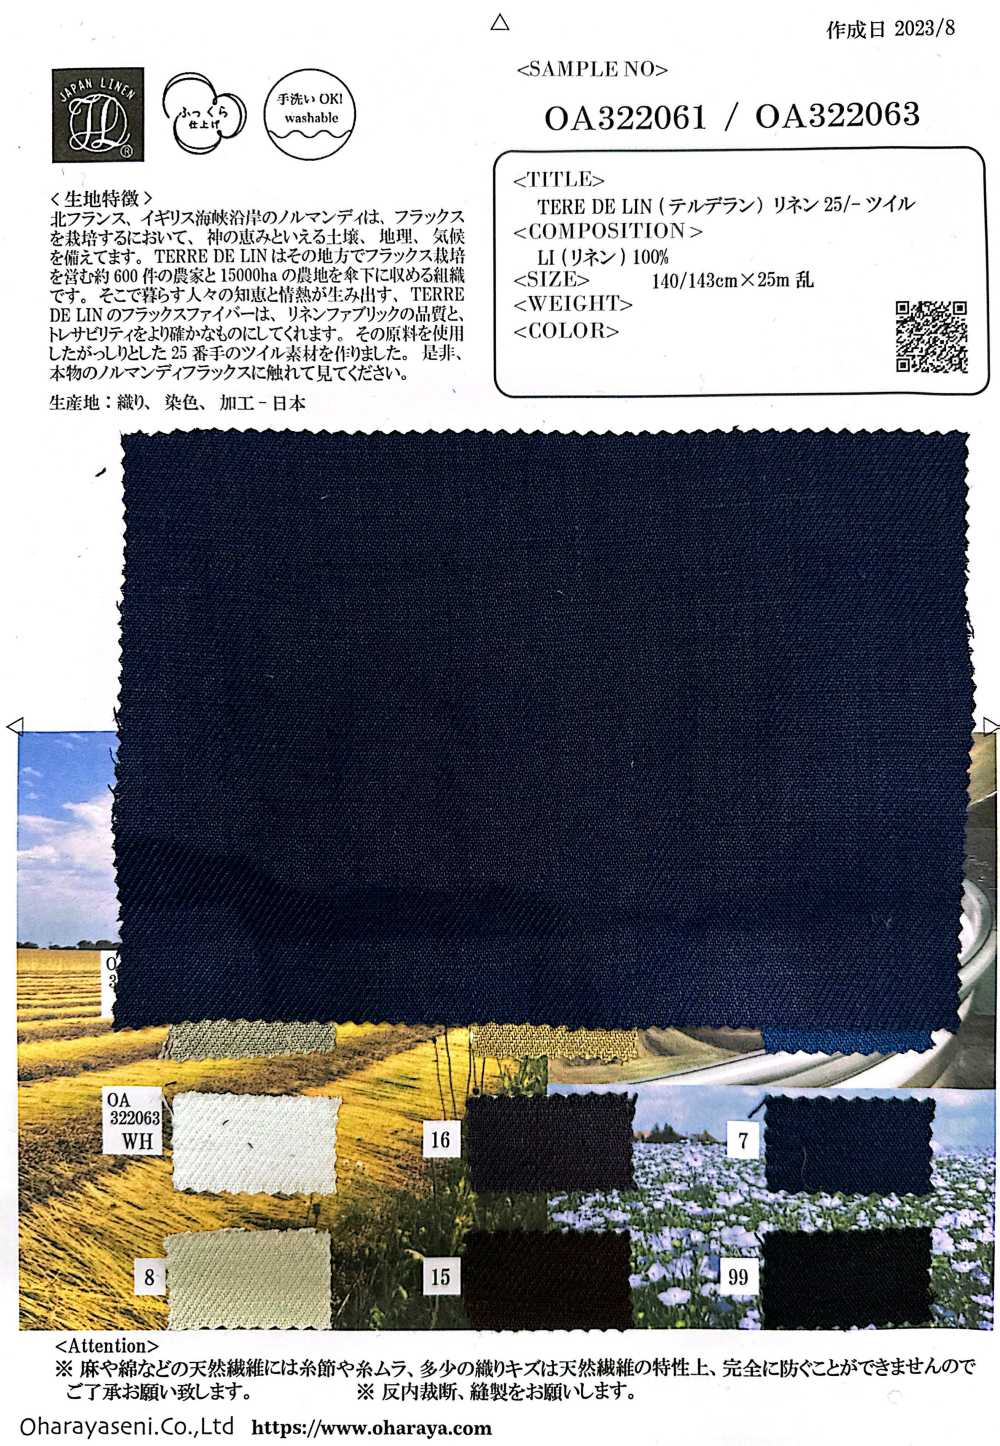 OA322061 TERE DE LIN Lin 25/-Twill[Fabrication De Textile] Oharayaseni